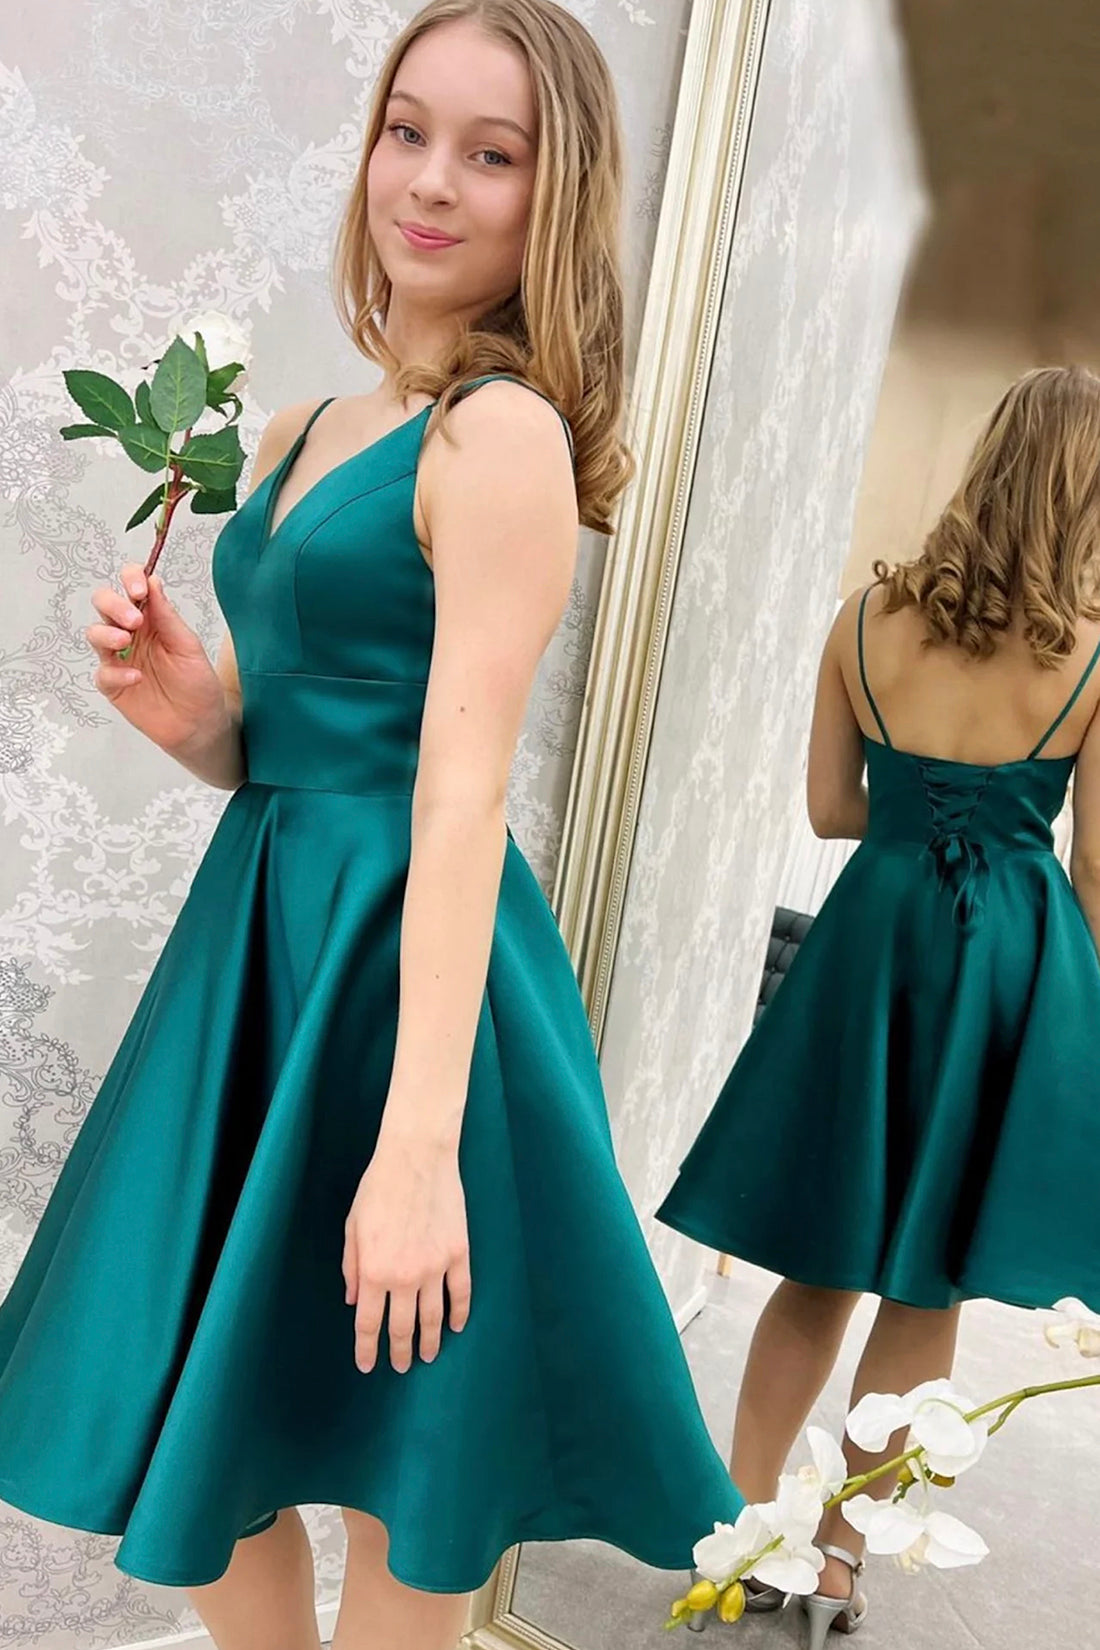 Cute Satin Short Prom Dress, Green V-Neck Party Dress, Green Homecoming Dress